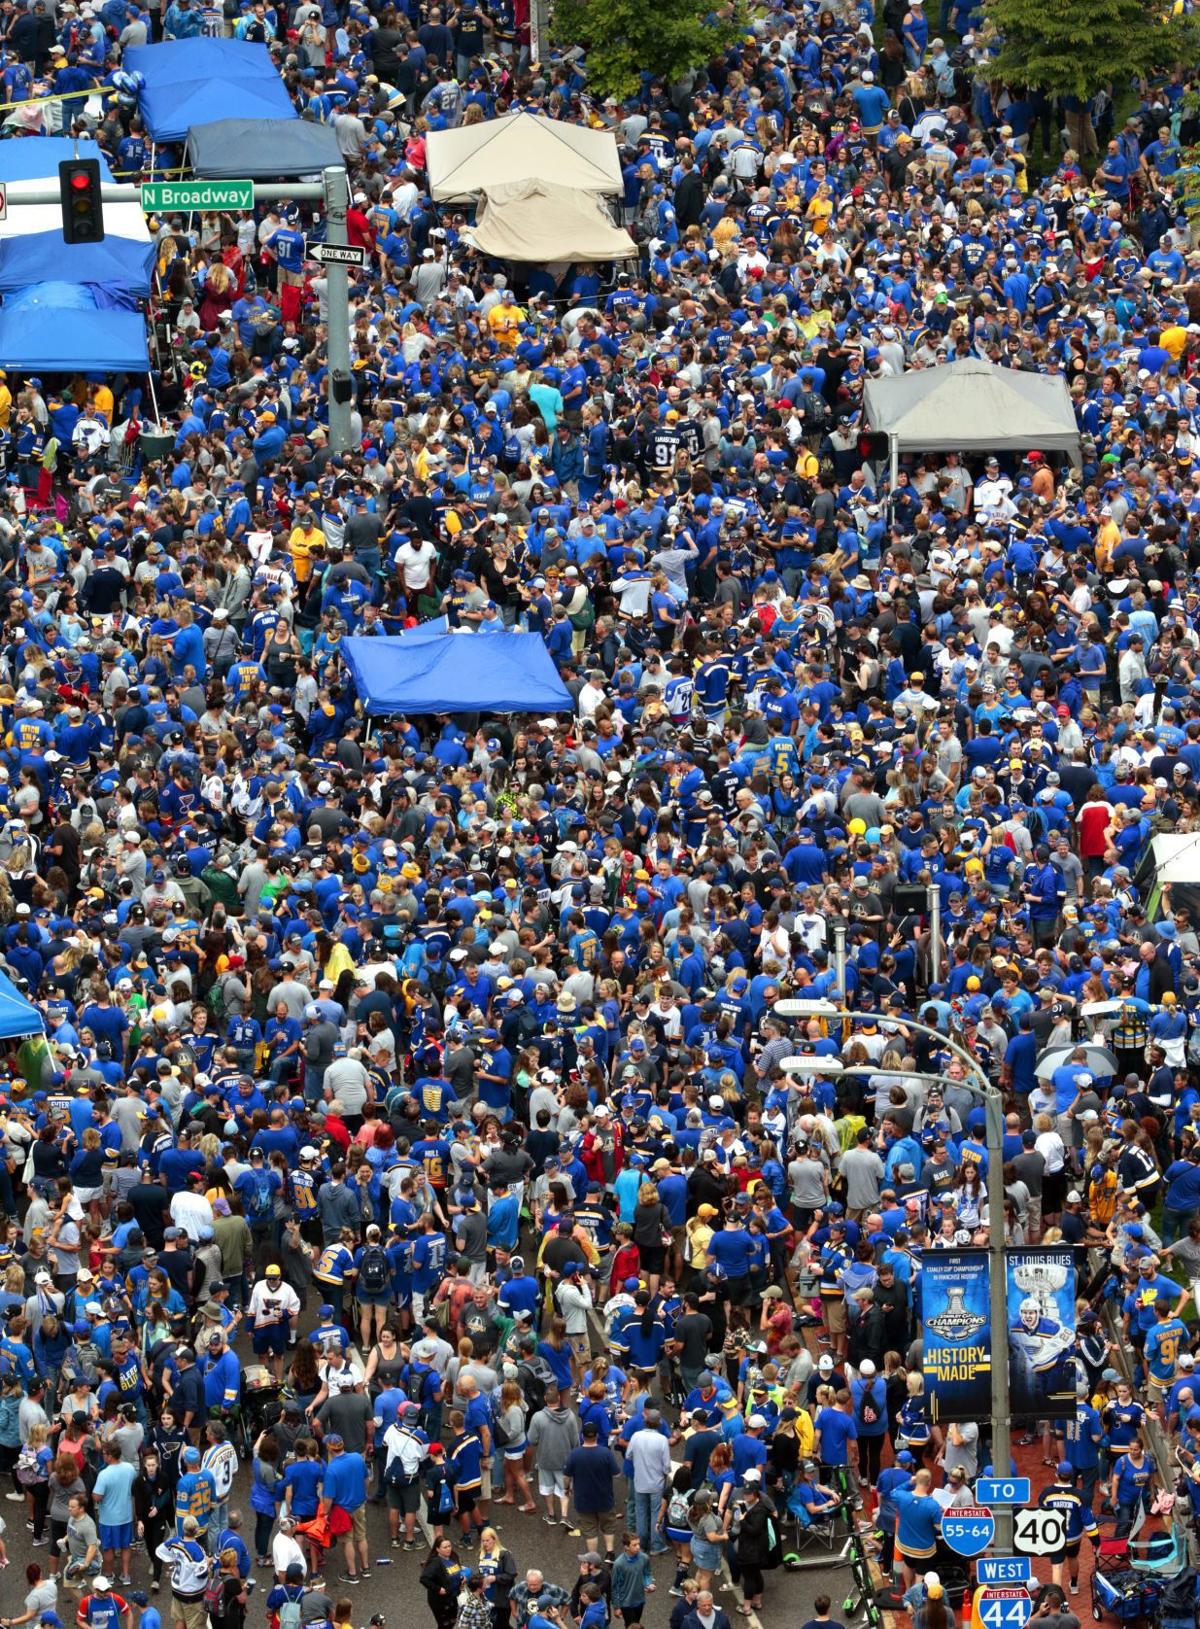 Blues wave overtakes downtown as fans celebrate their team | Metro | www.bagsaleusa.com